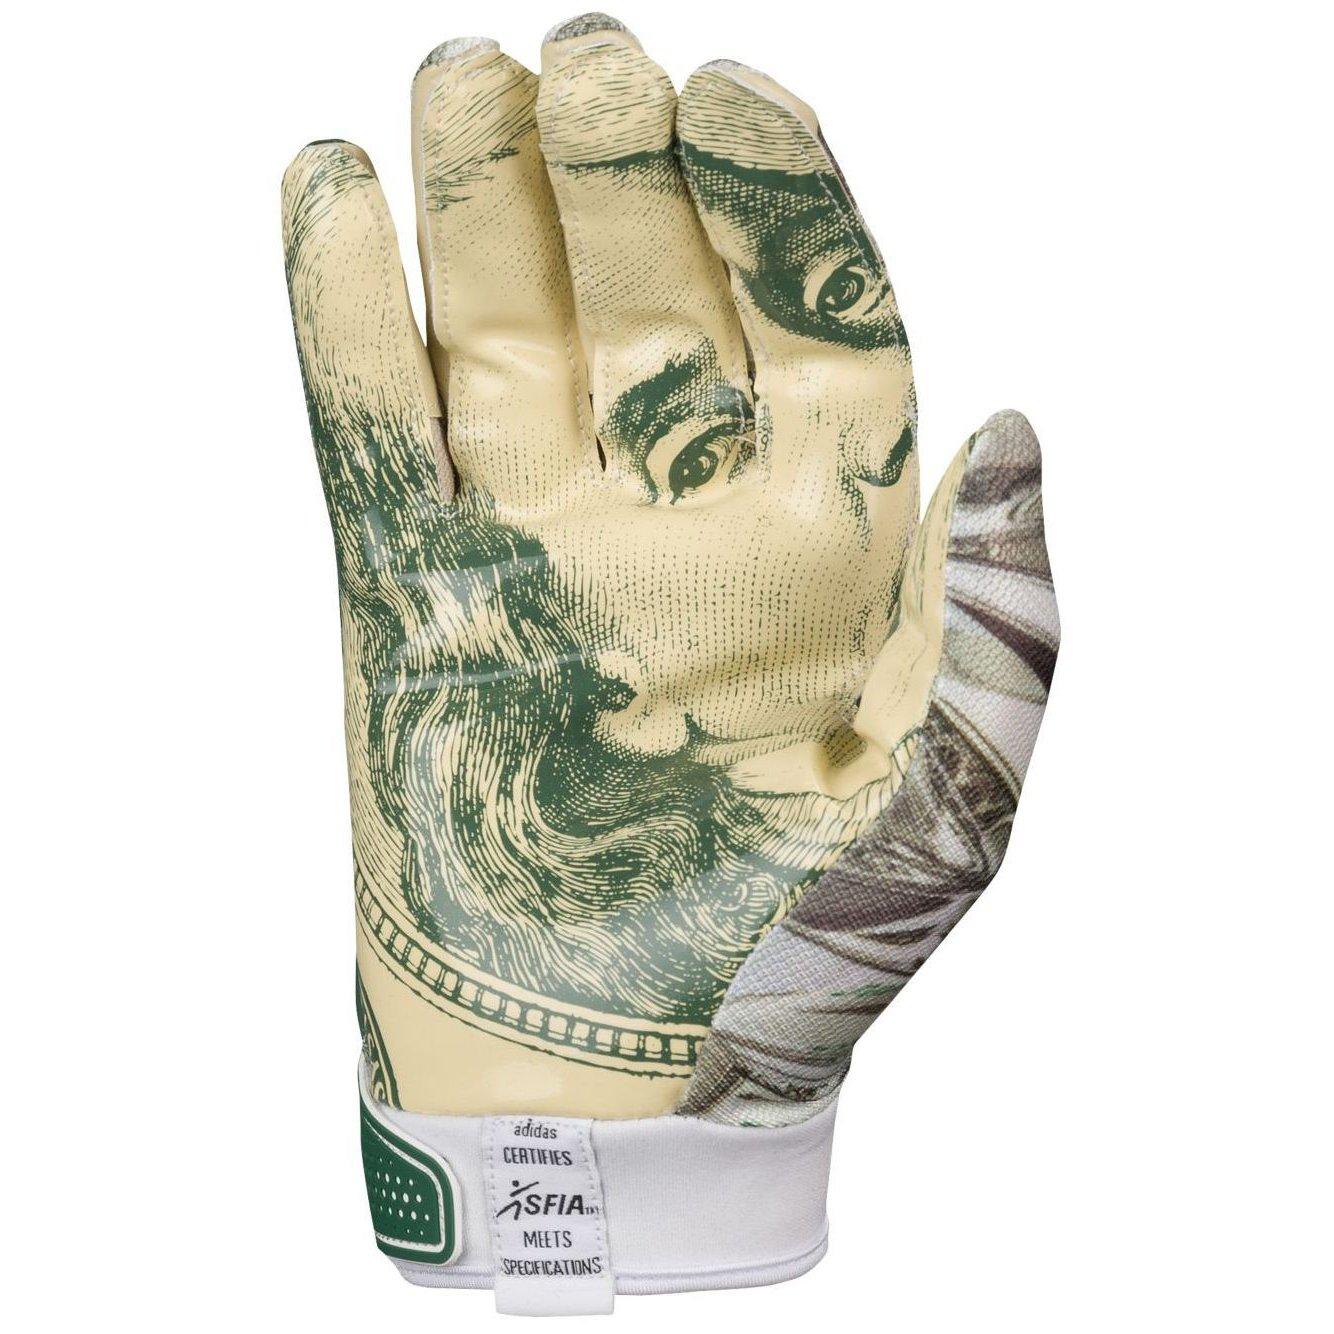 snoop dogg football gloves